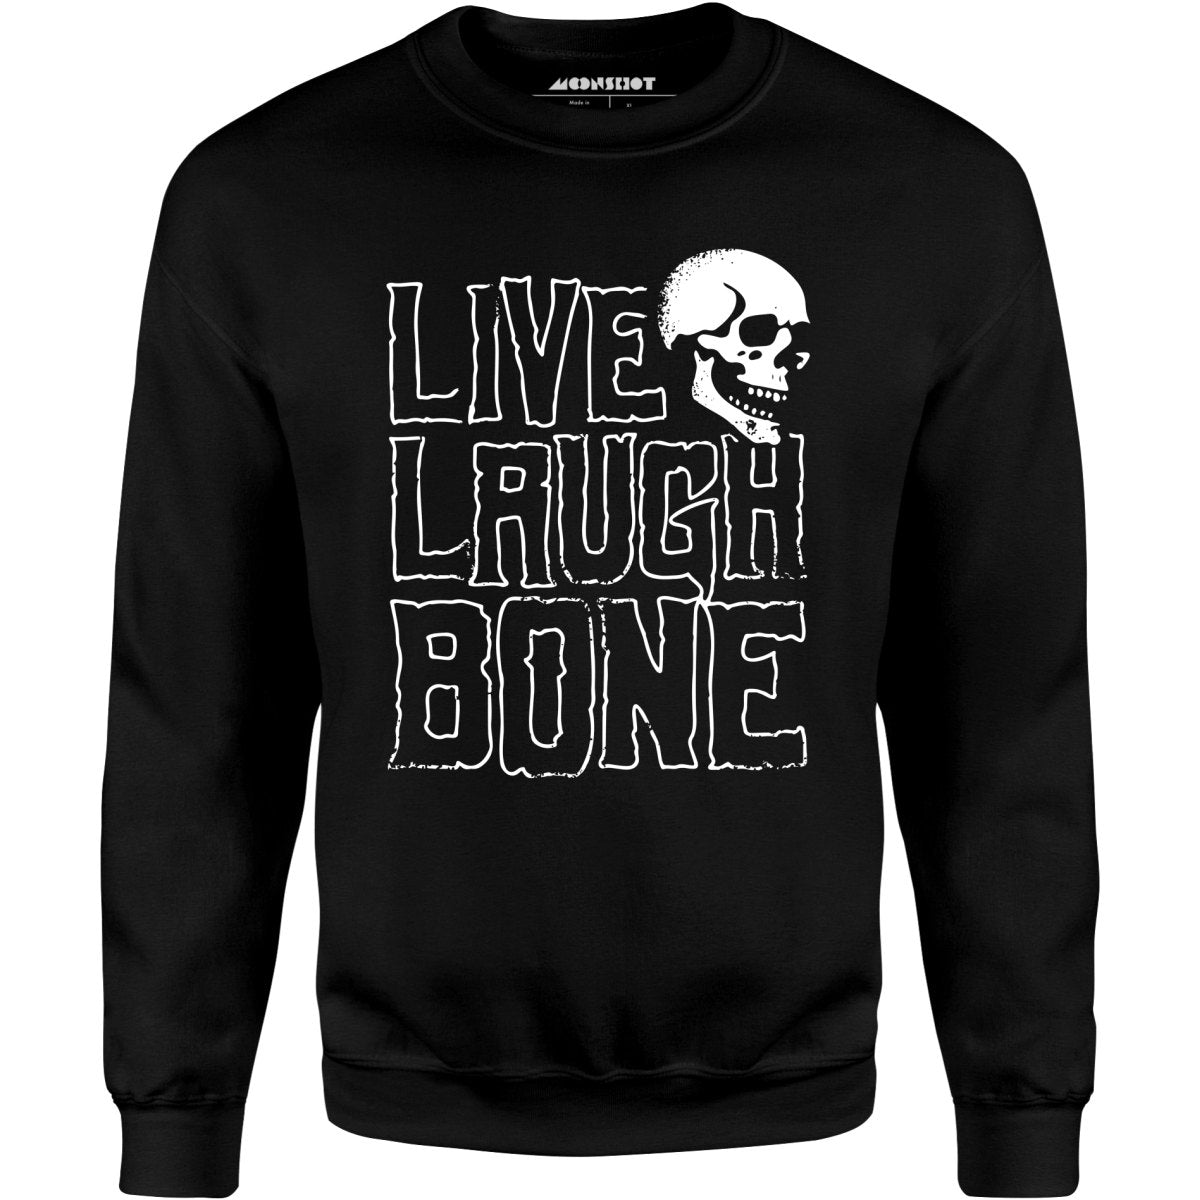 Live Laugh Bone - Unisex Sweatshirt